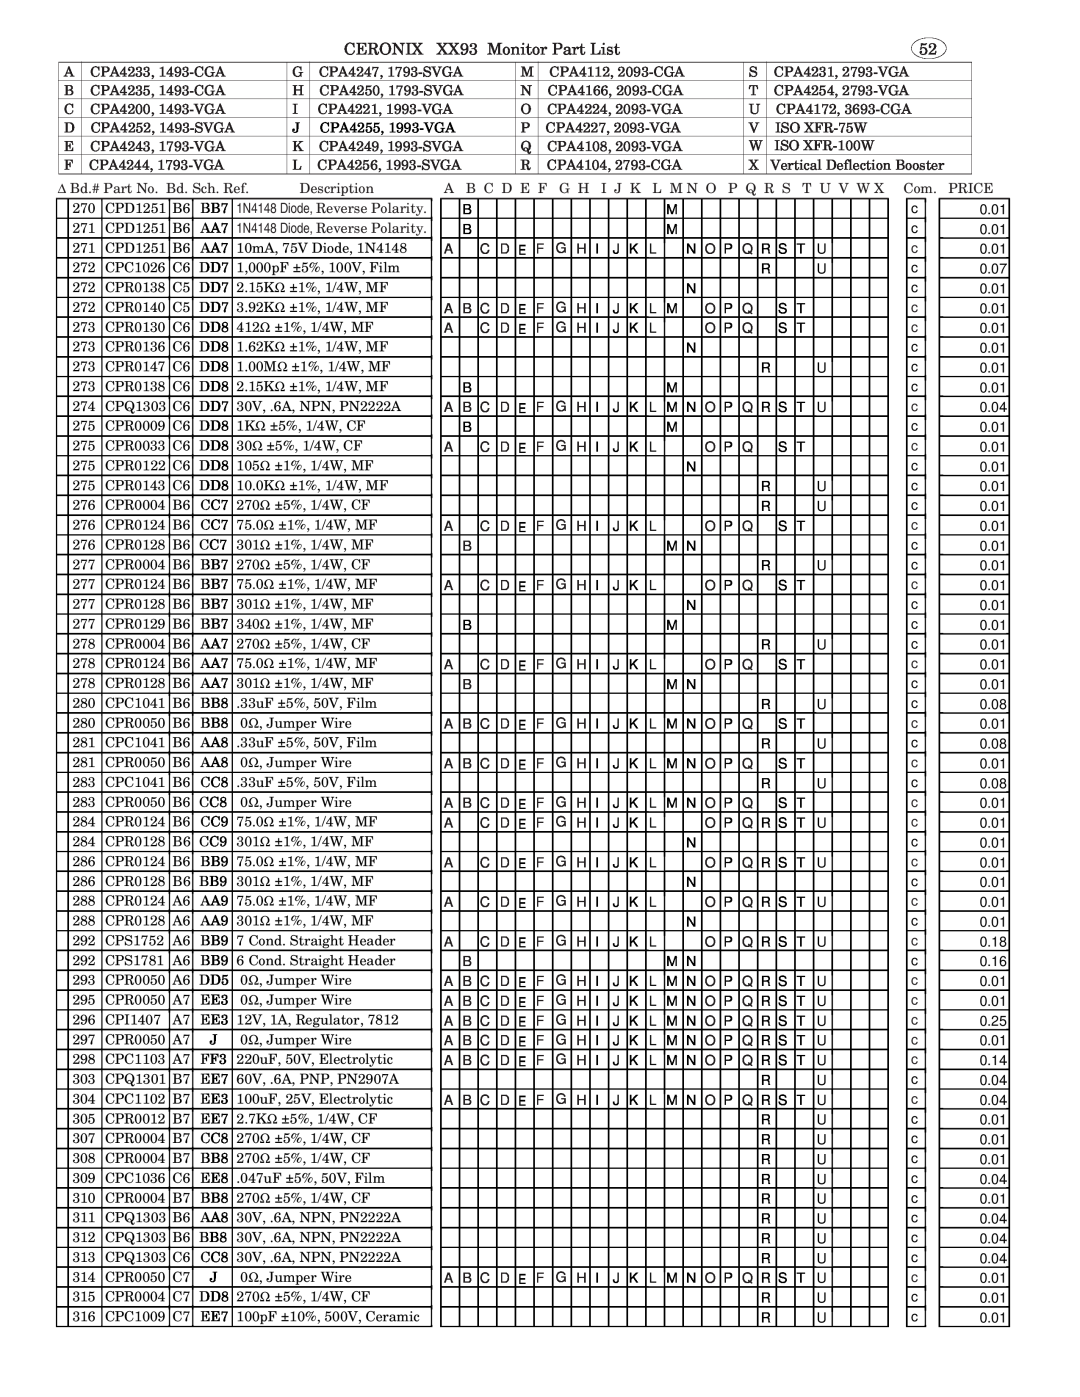 Genius 3693, ISO XFR-75W, 2093, 1493, 2793, 1793, 1993, ISO XFR-100W manual CERONIX XX93 Monitor Part List 